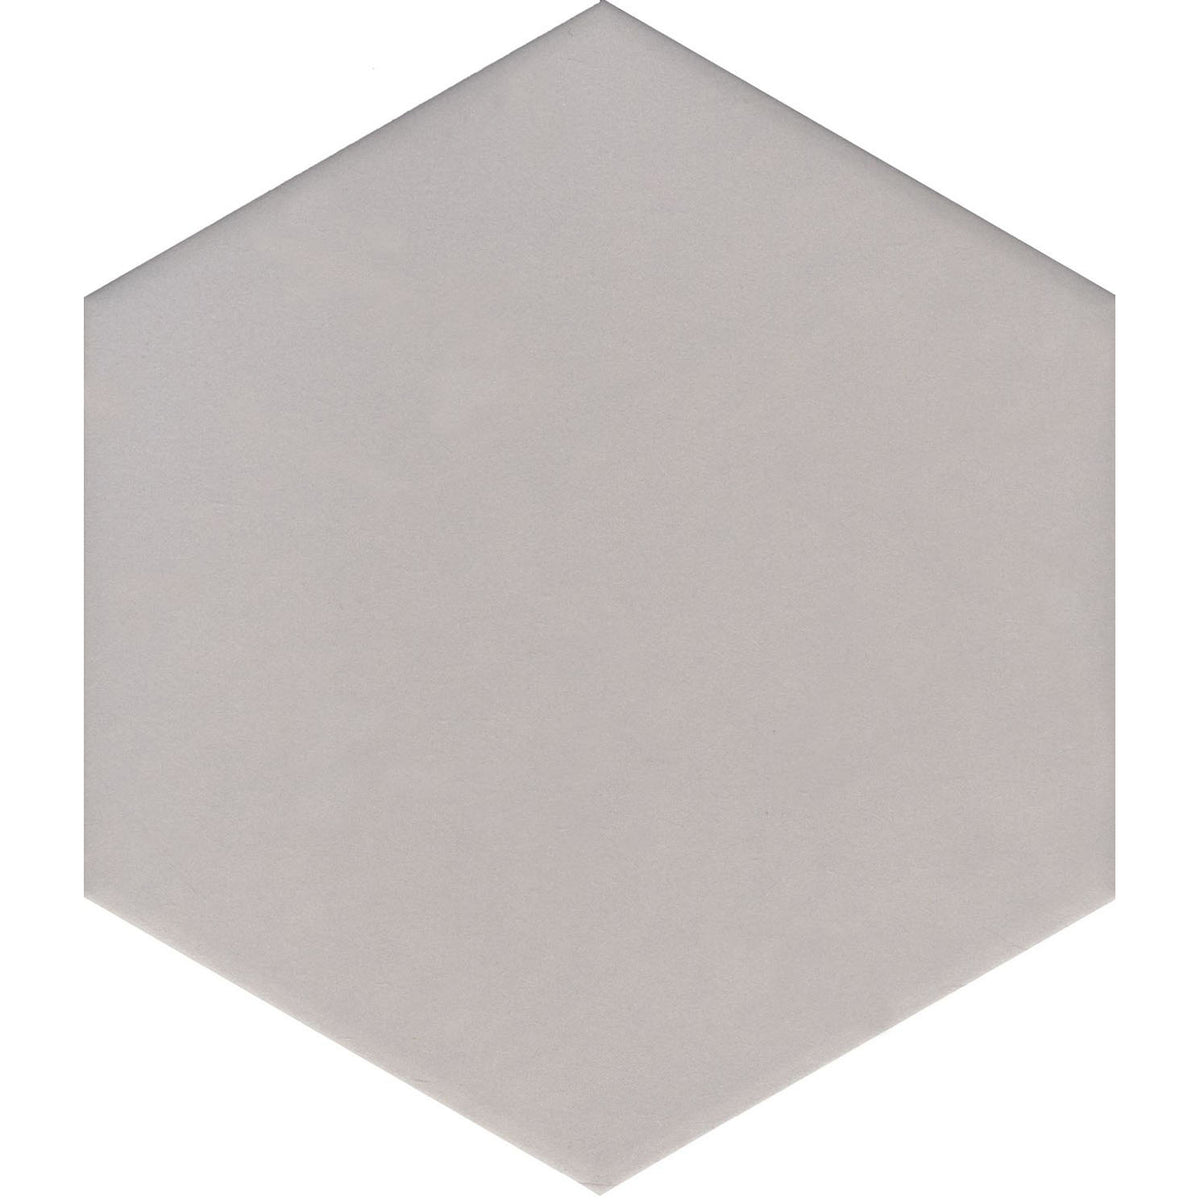 Floors 2000 - Solids - 8.5 in. x 10 in. Porcelain Hexagon Tile - Silver